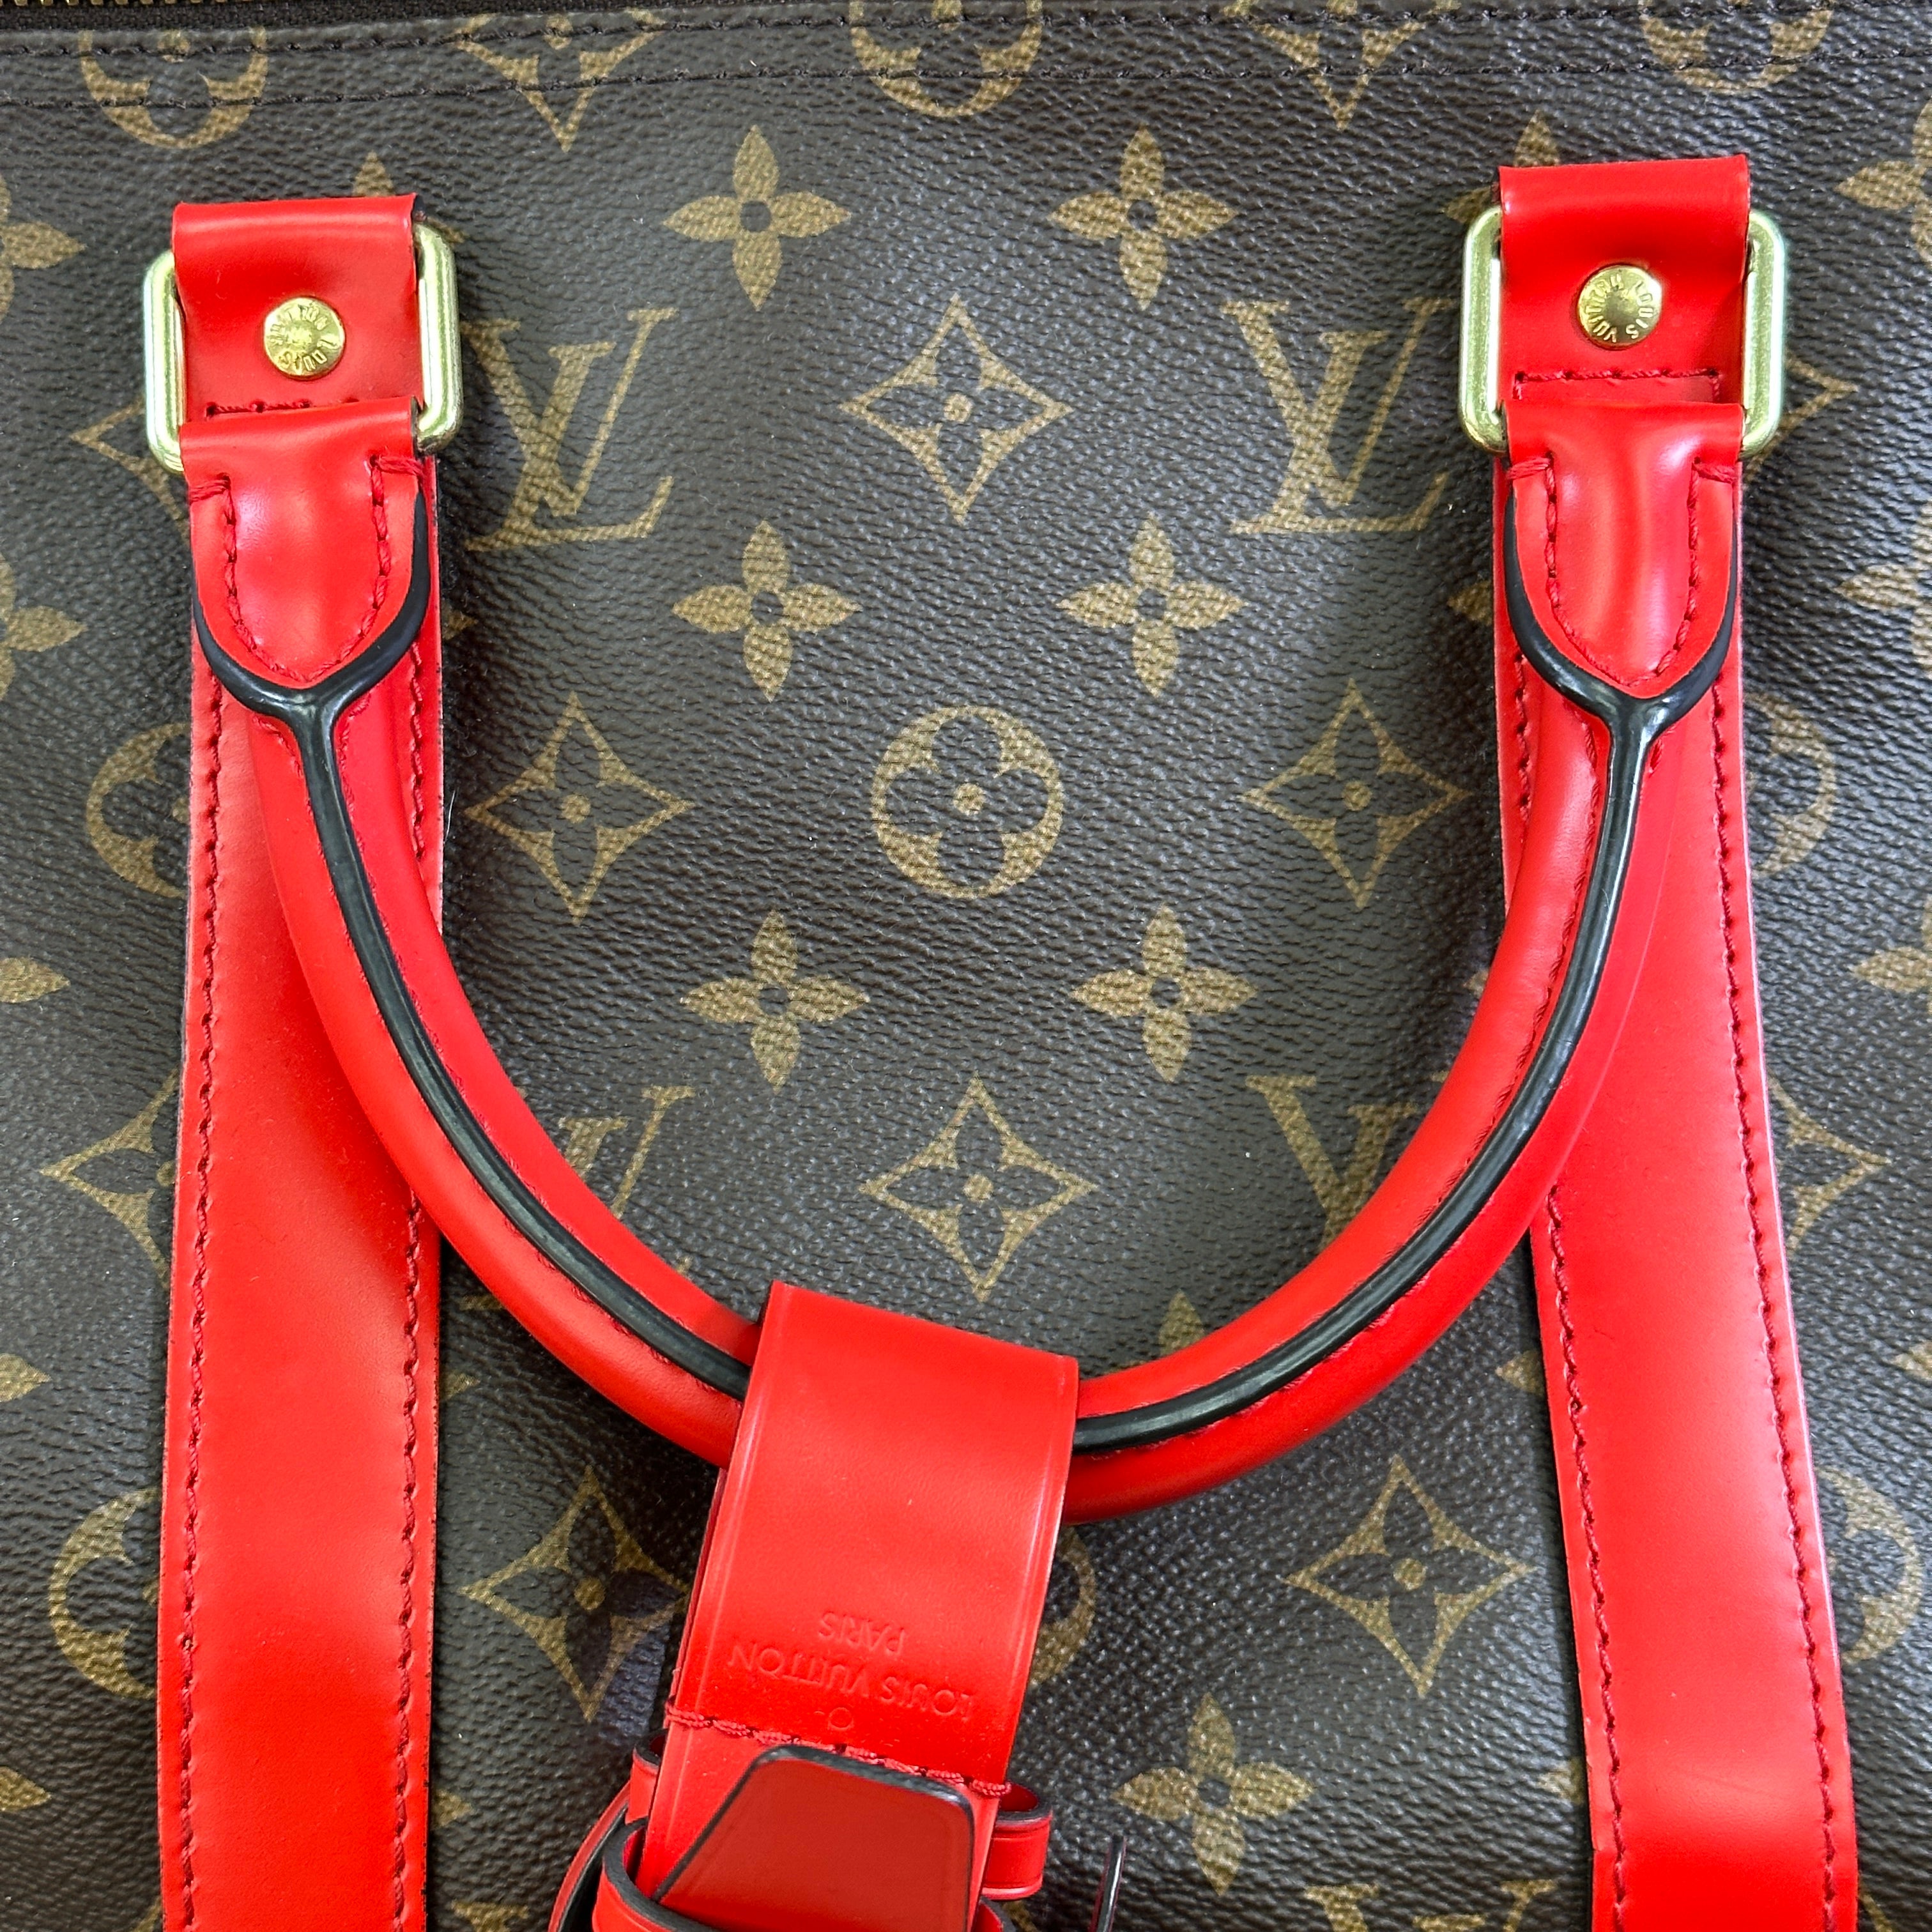 Louis Vuitton Keepall 50 Monogram Canvas Travel Bag Red